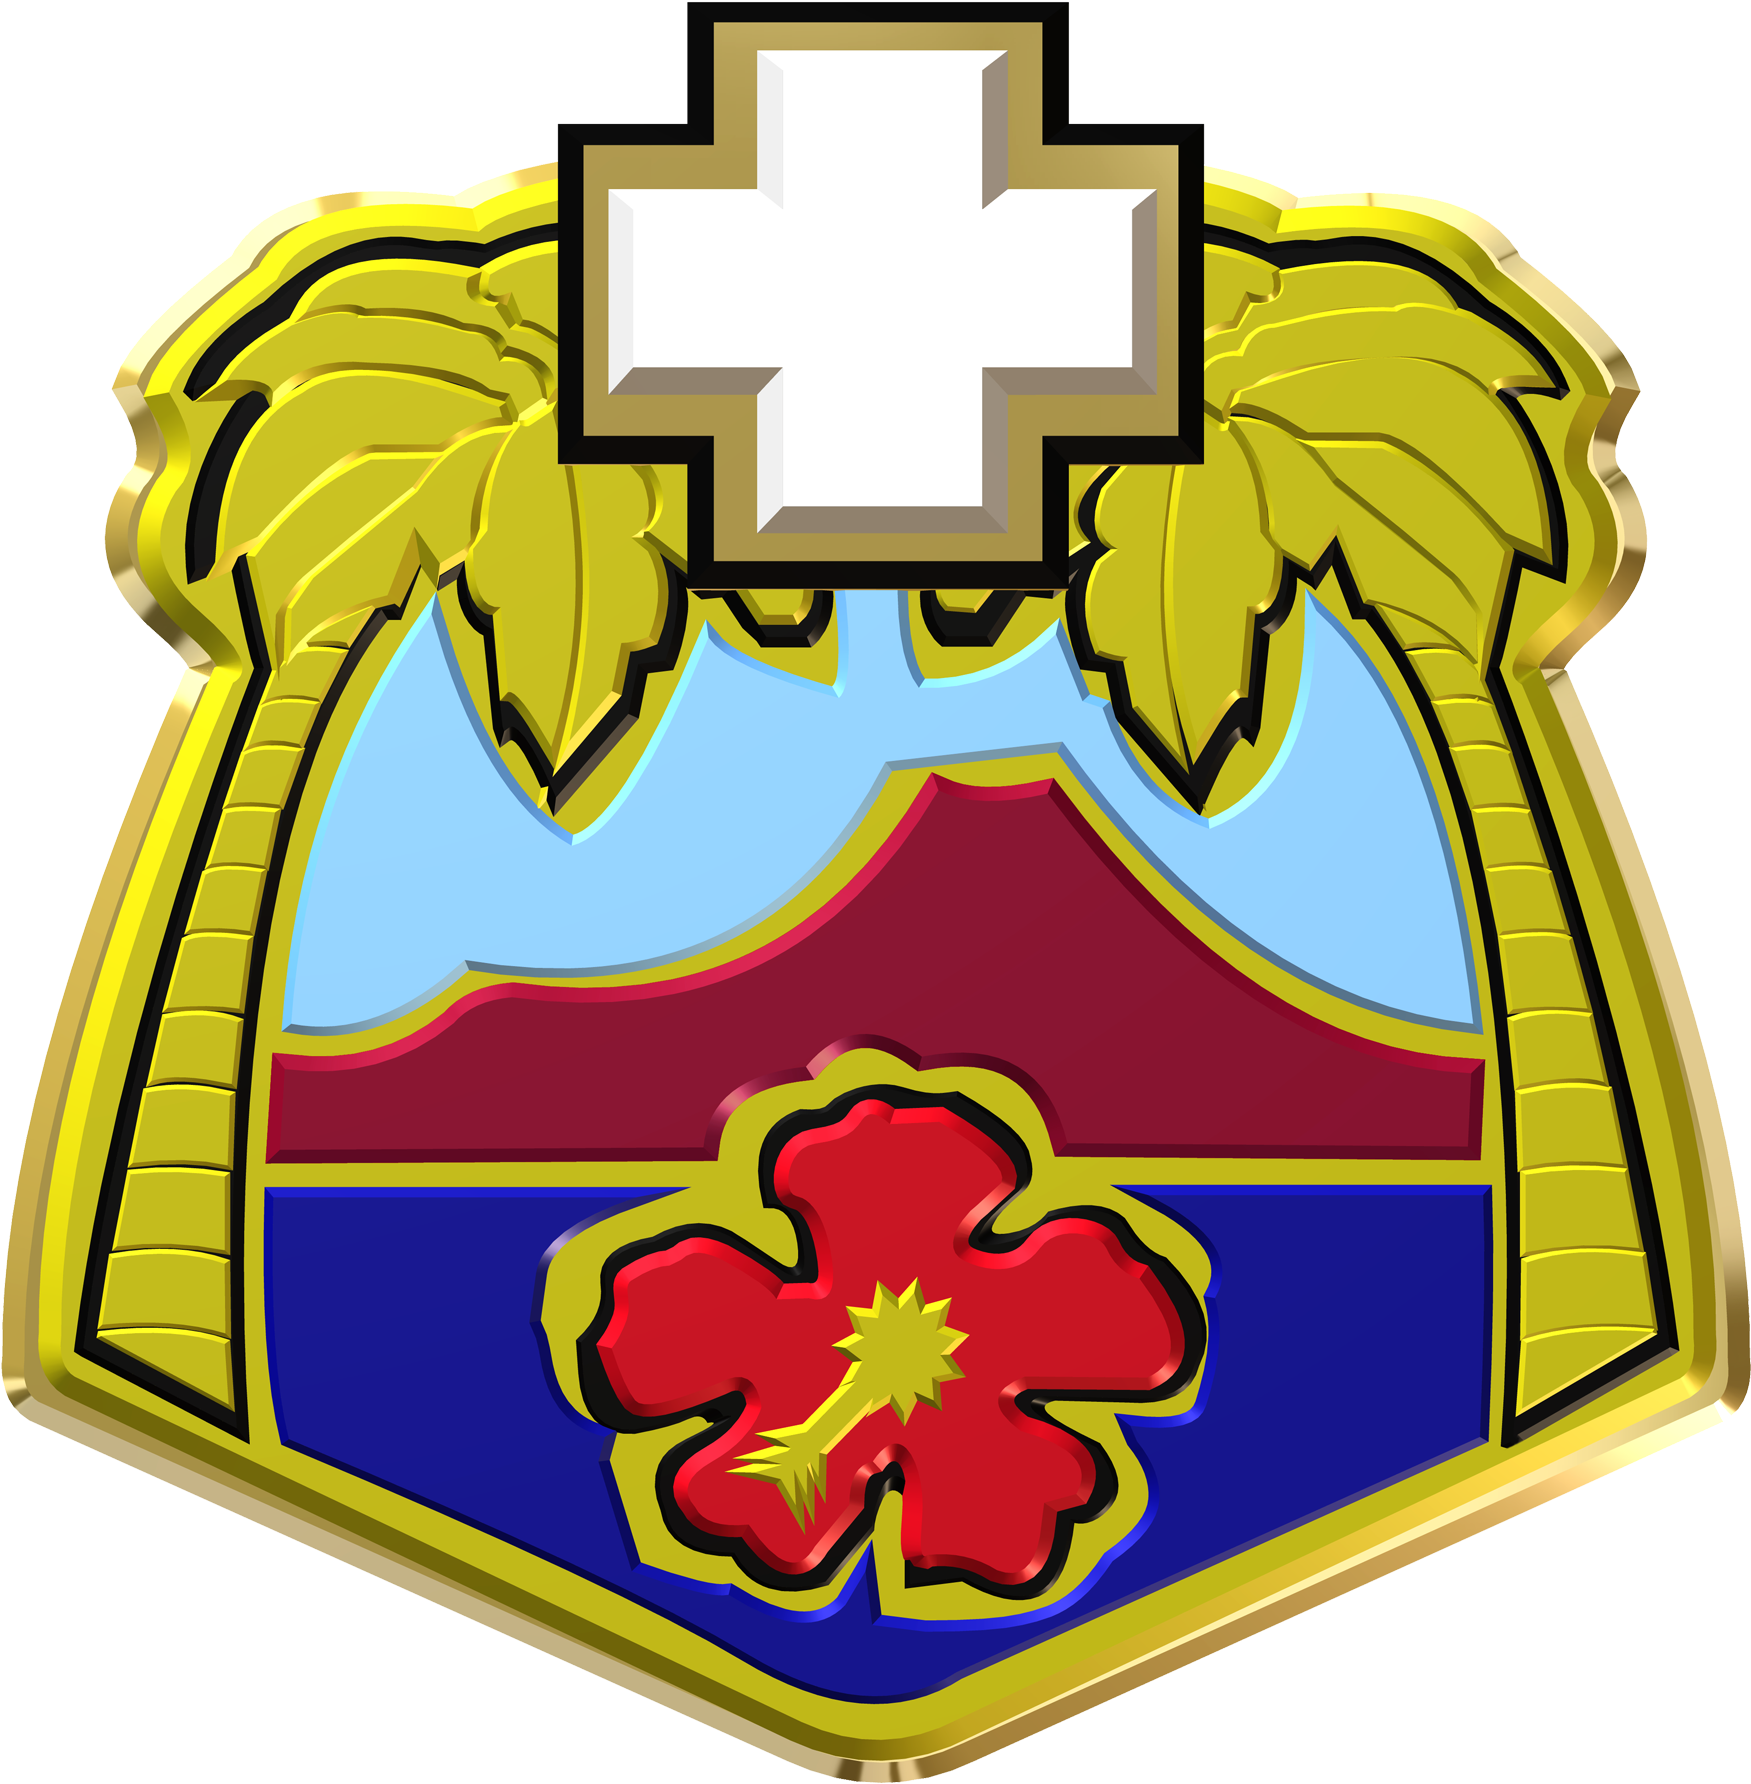 Tripler Army Medical Center Logo - Tripler Army Medical Center Pediatric Department (1800x1800)